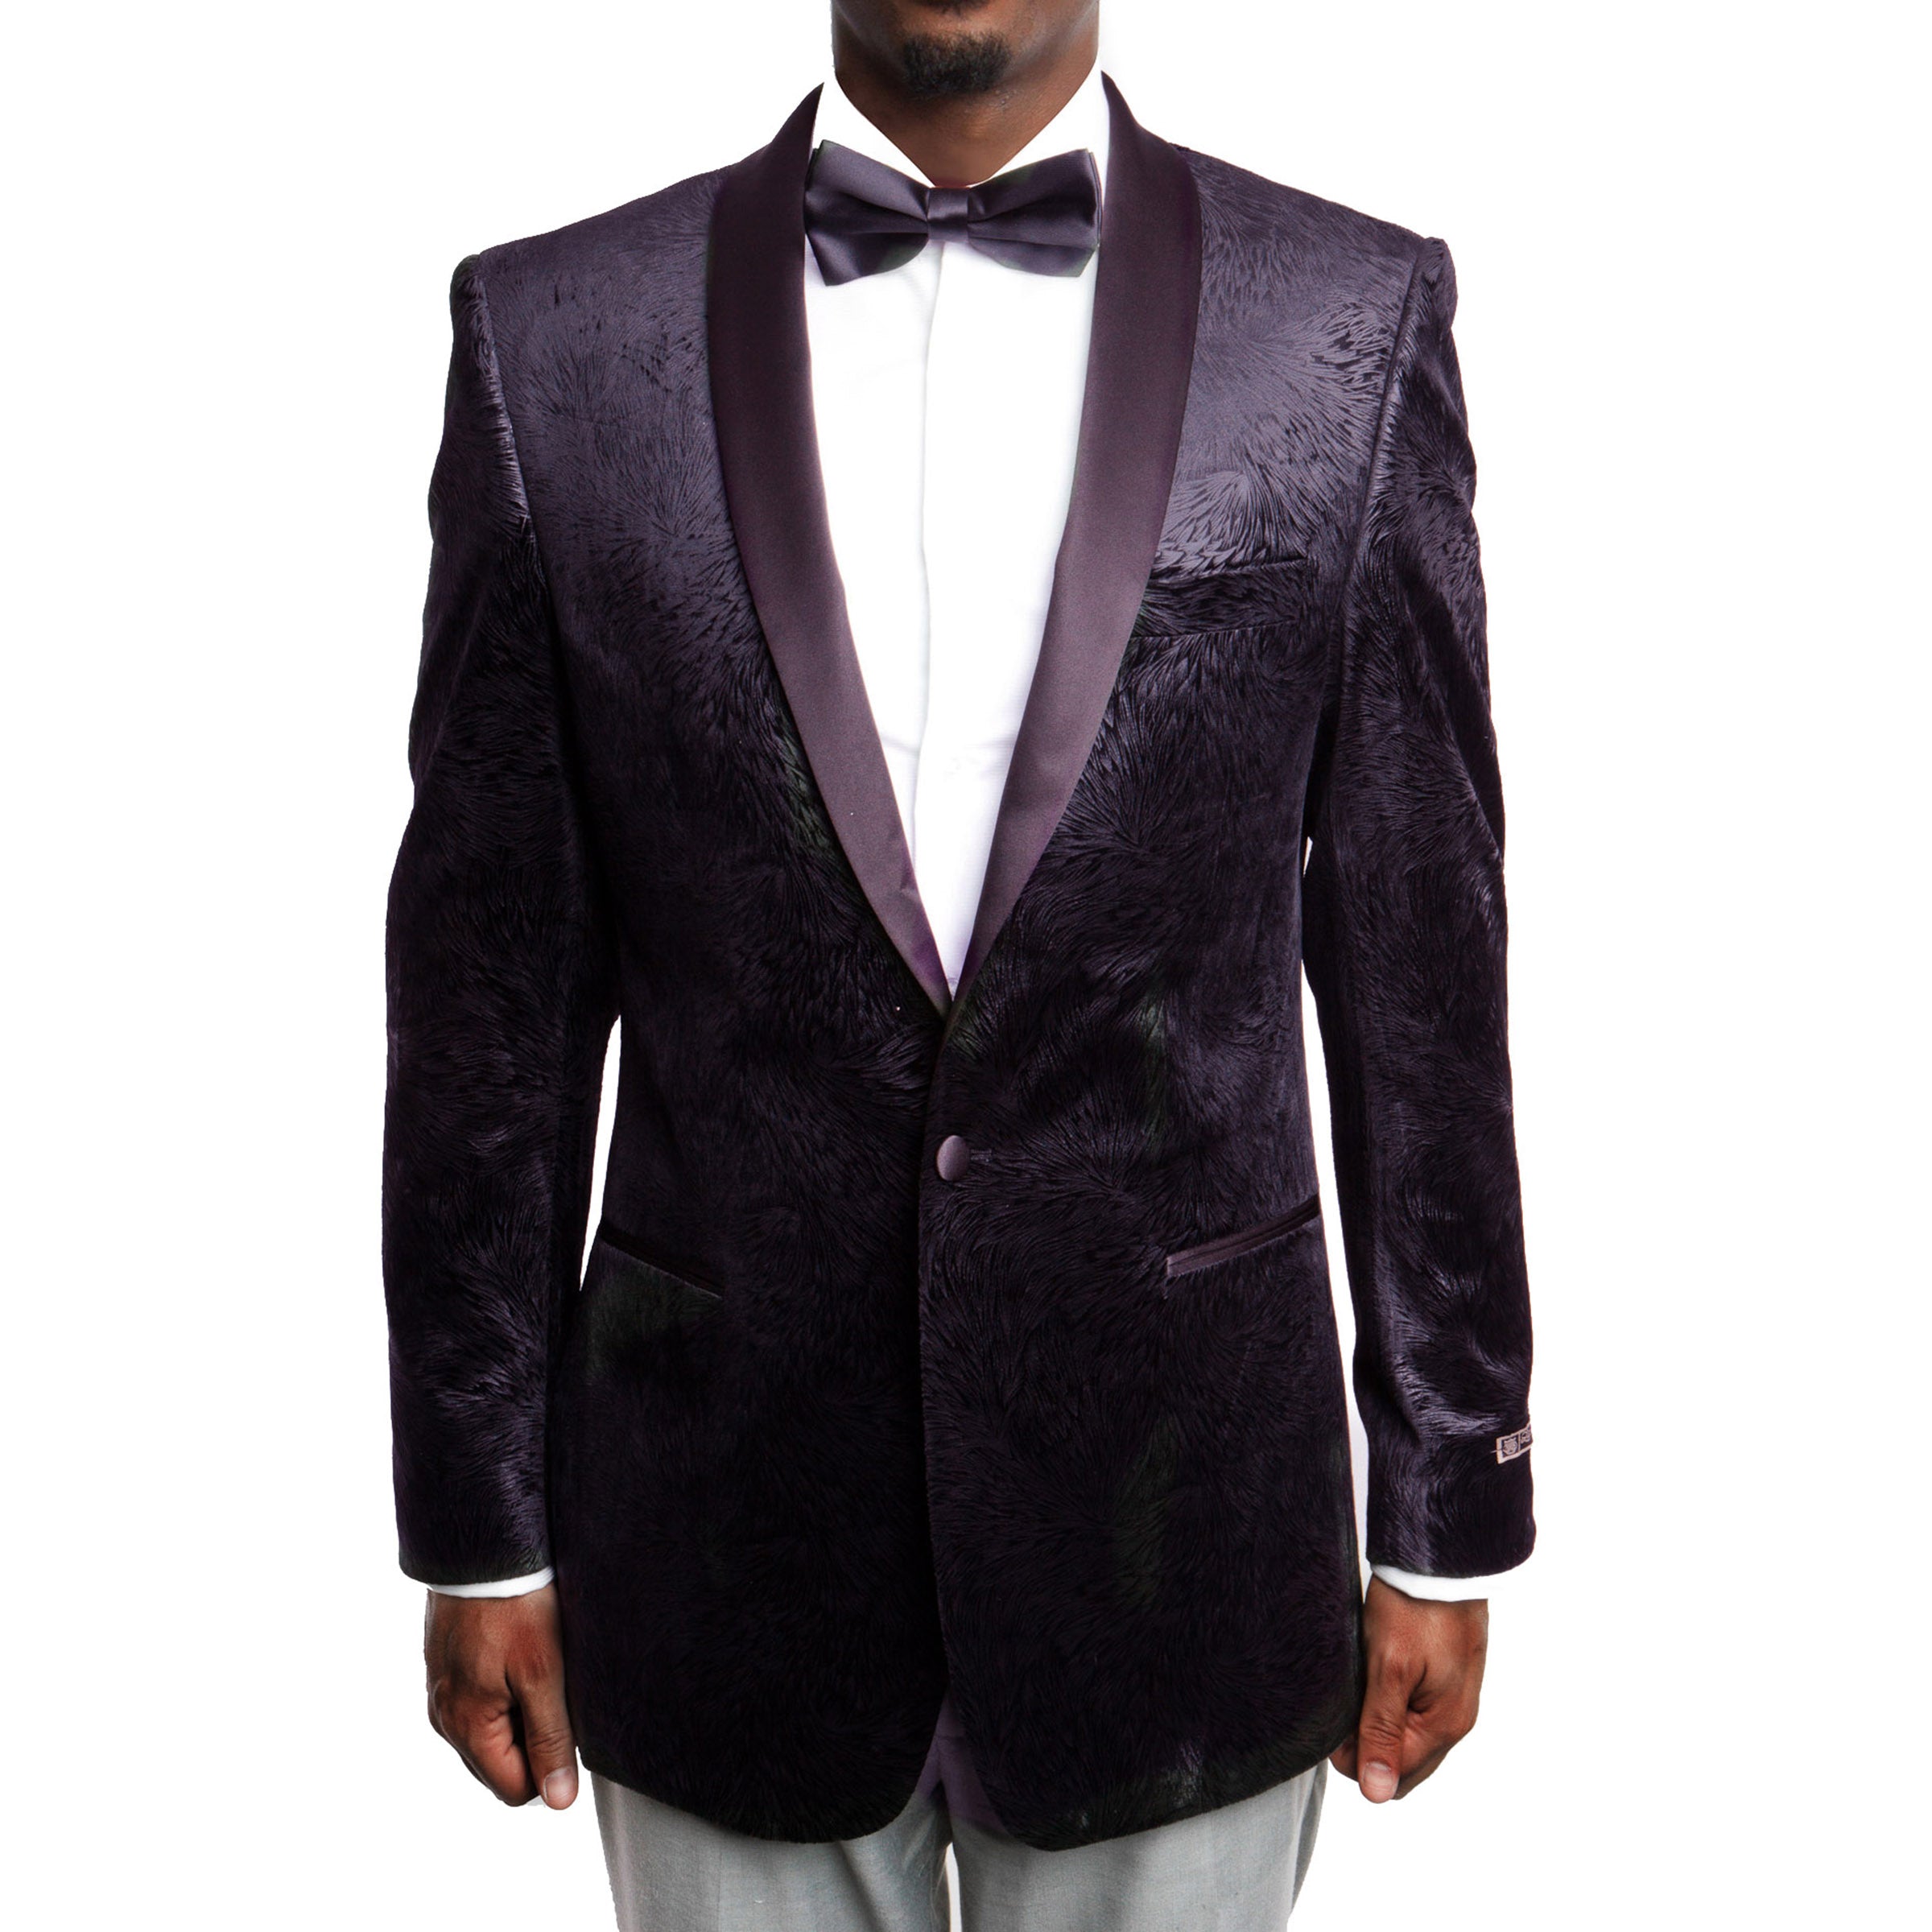 Plum Empire Show Blazers Formal Dinner Suit Jackets For Men ME172-03